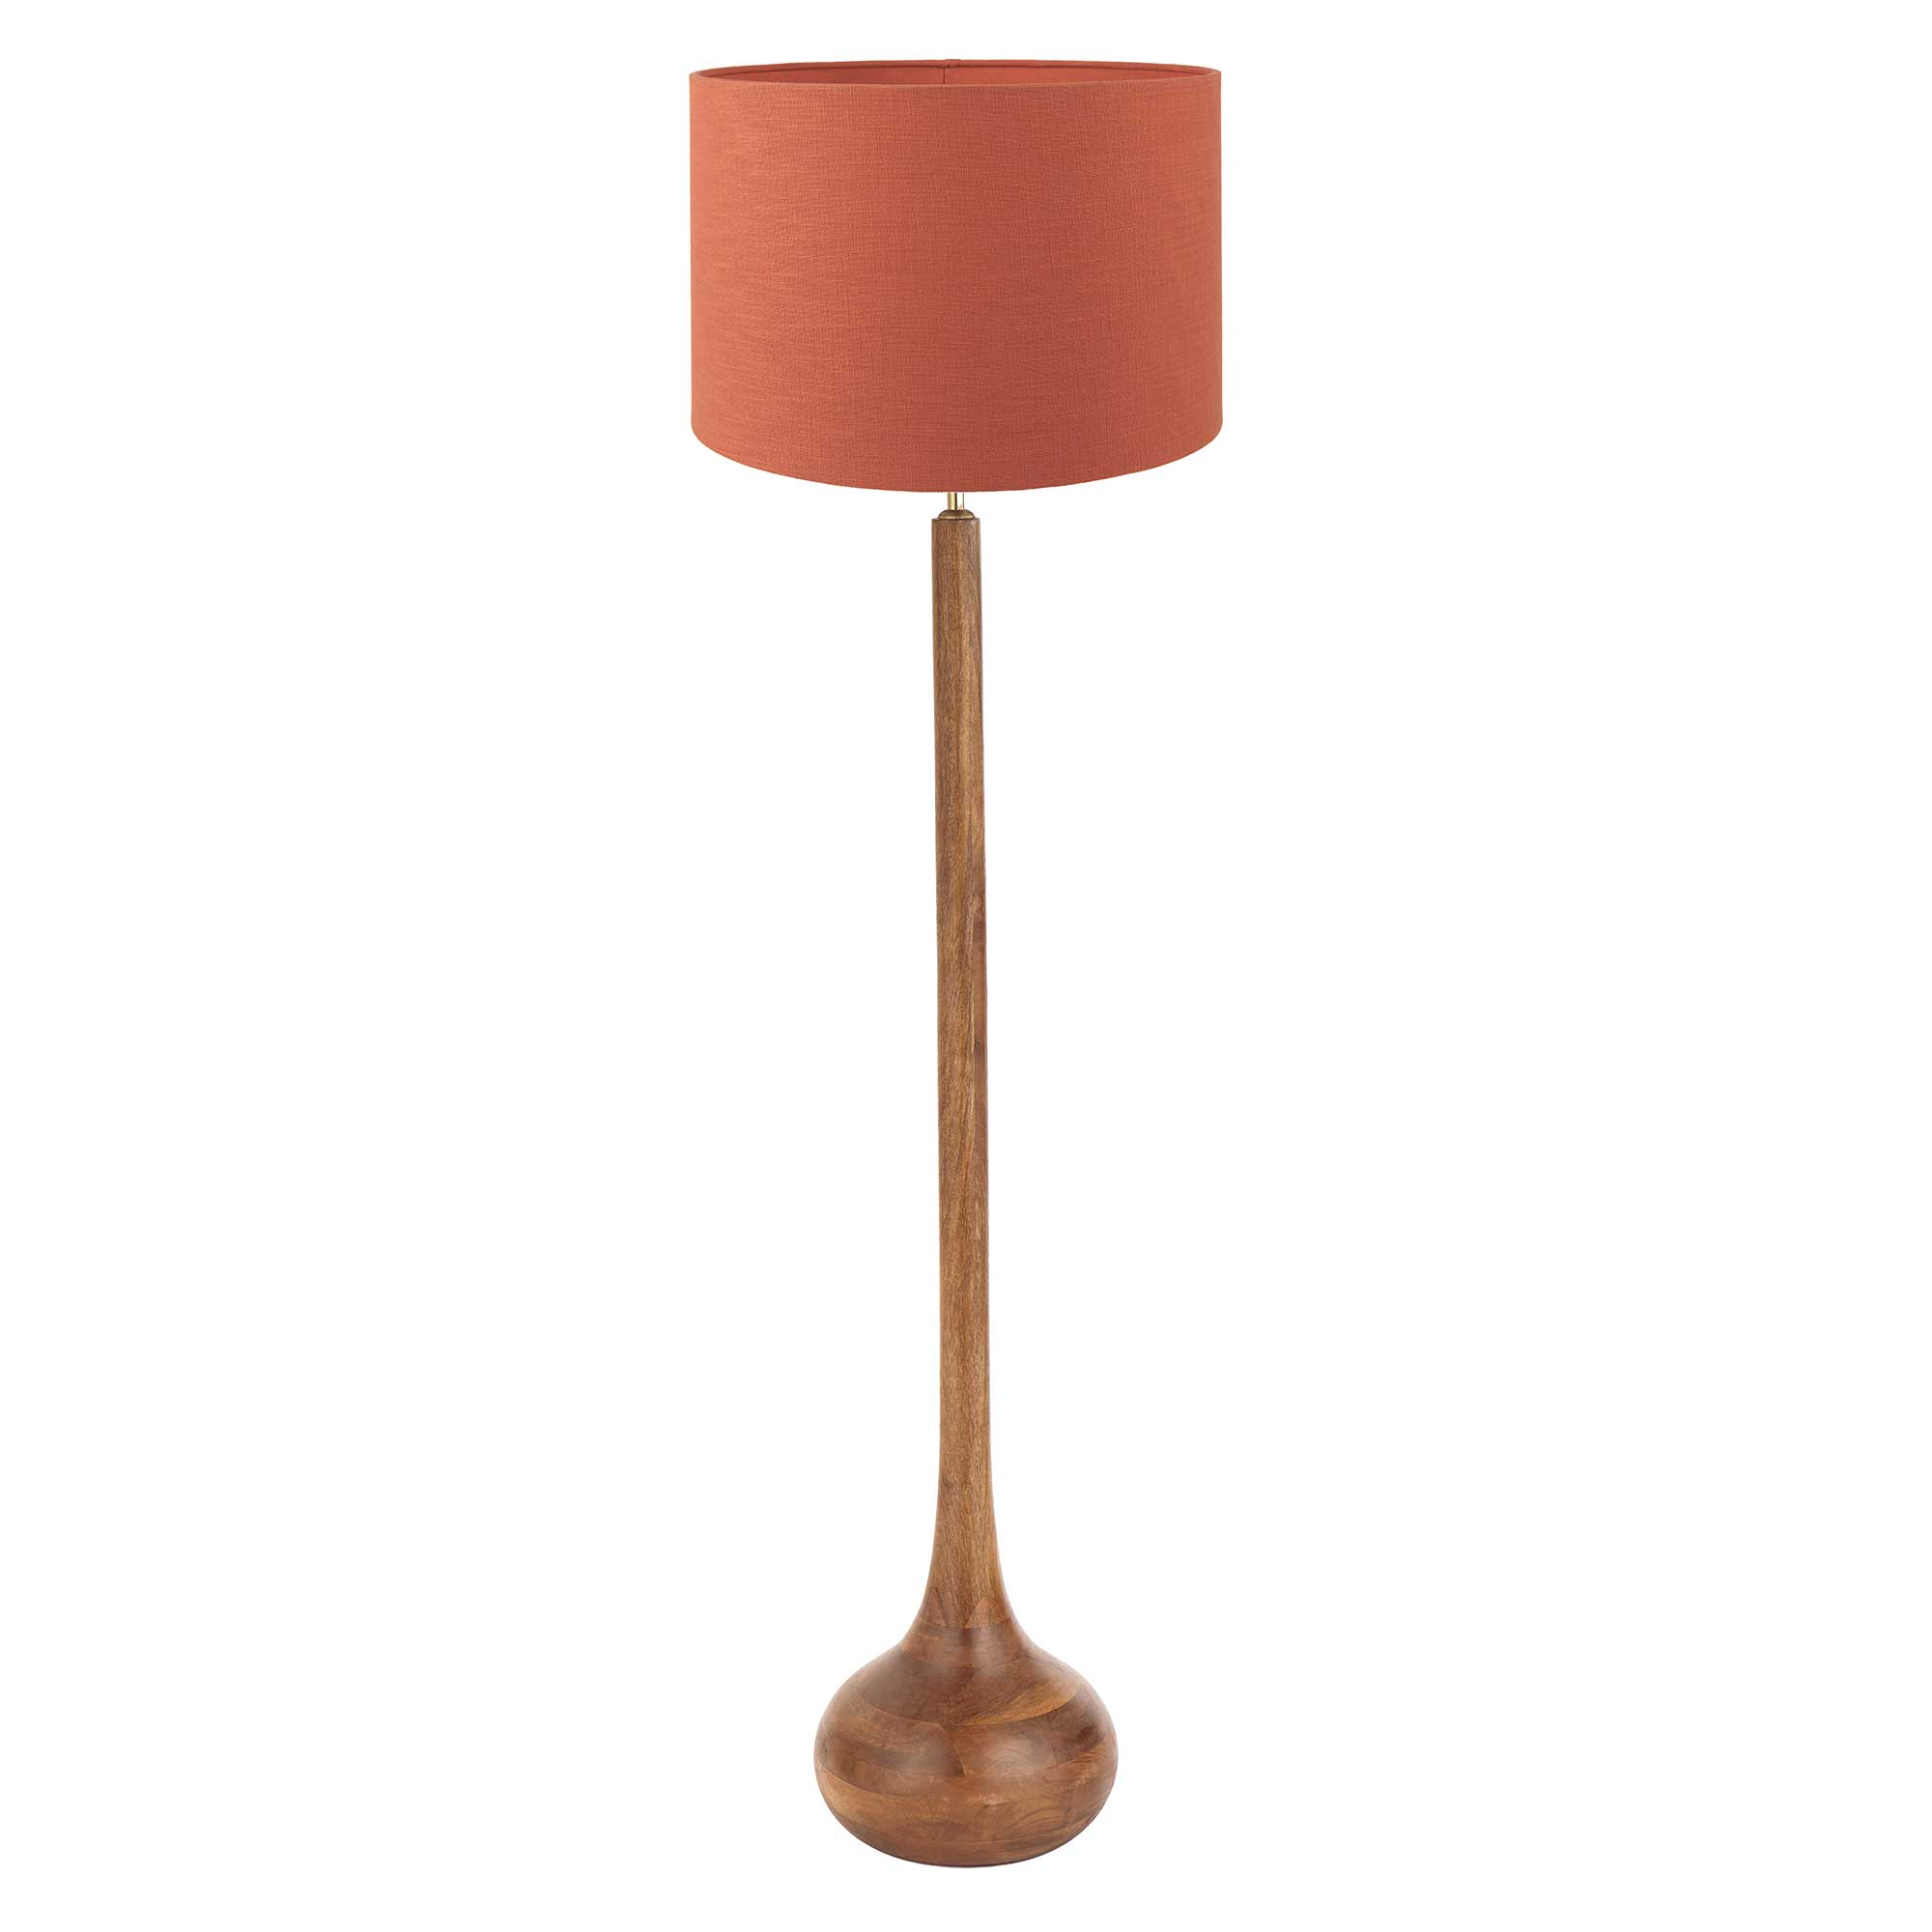 Tall Wooden Floor Lamp, Brown | Barker & Stonehouse